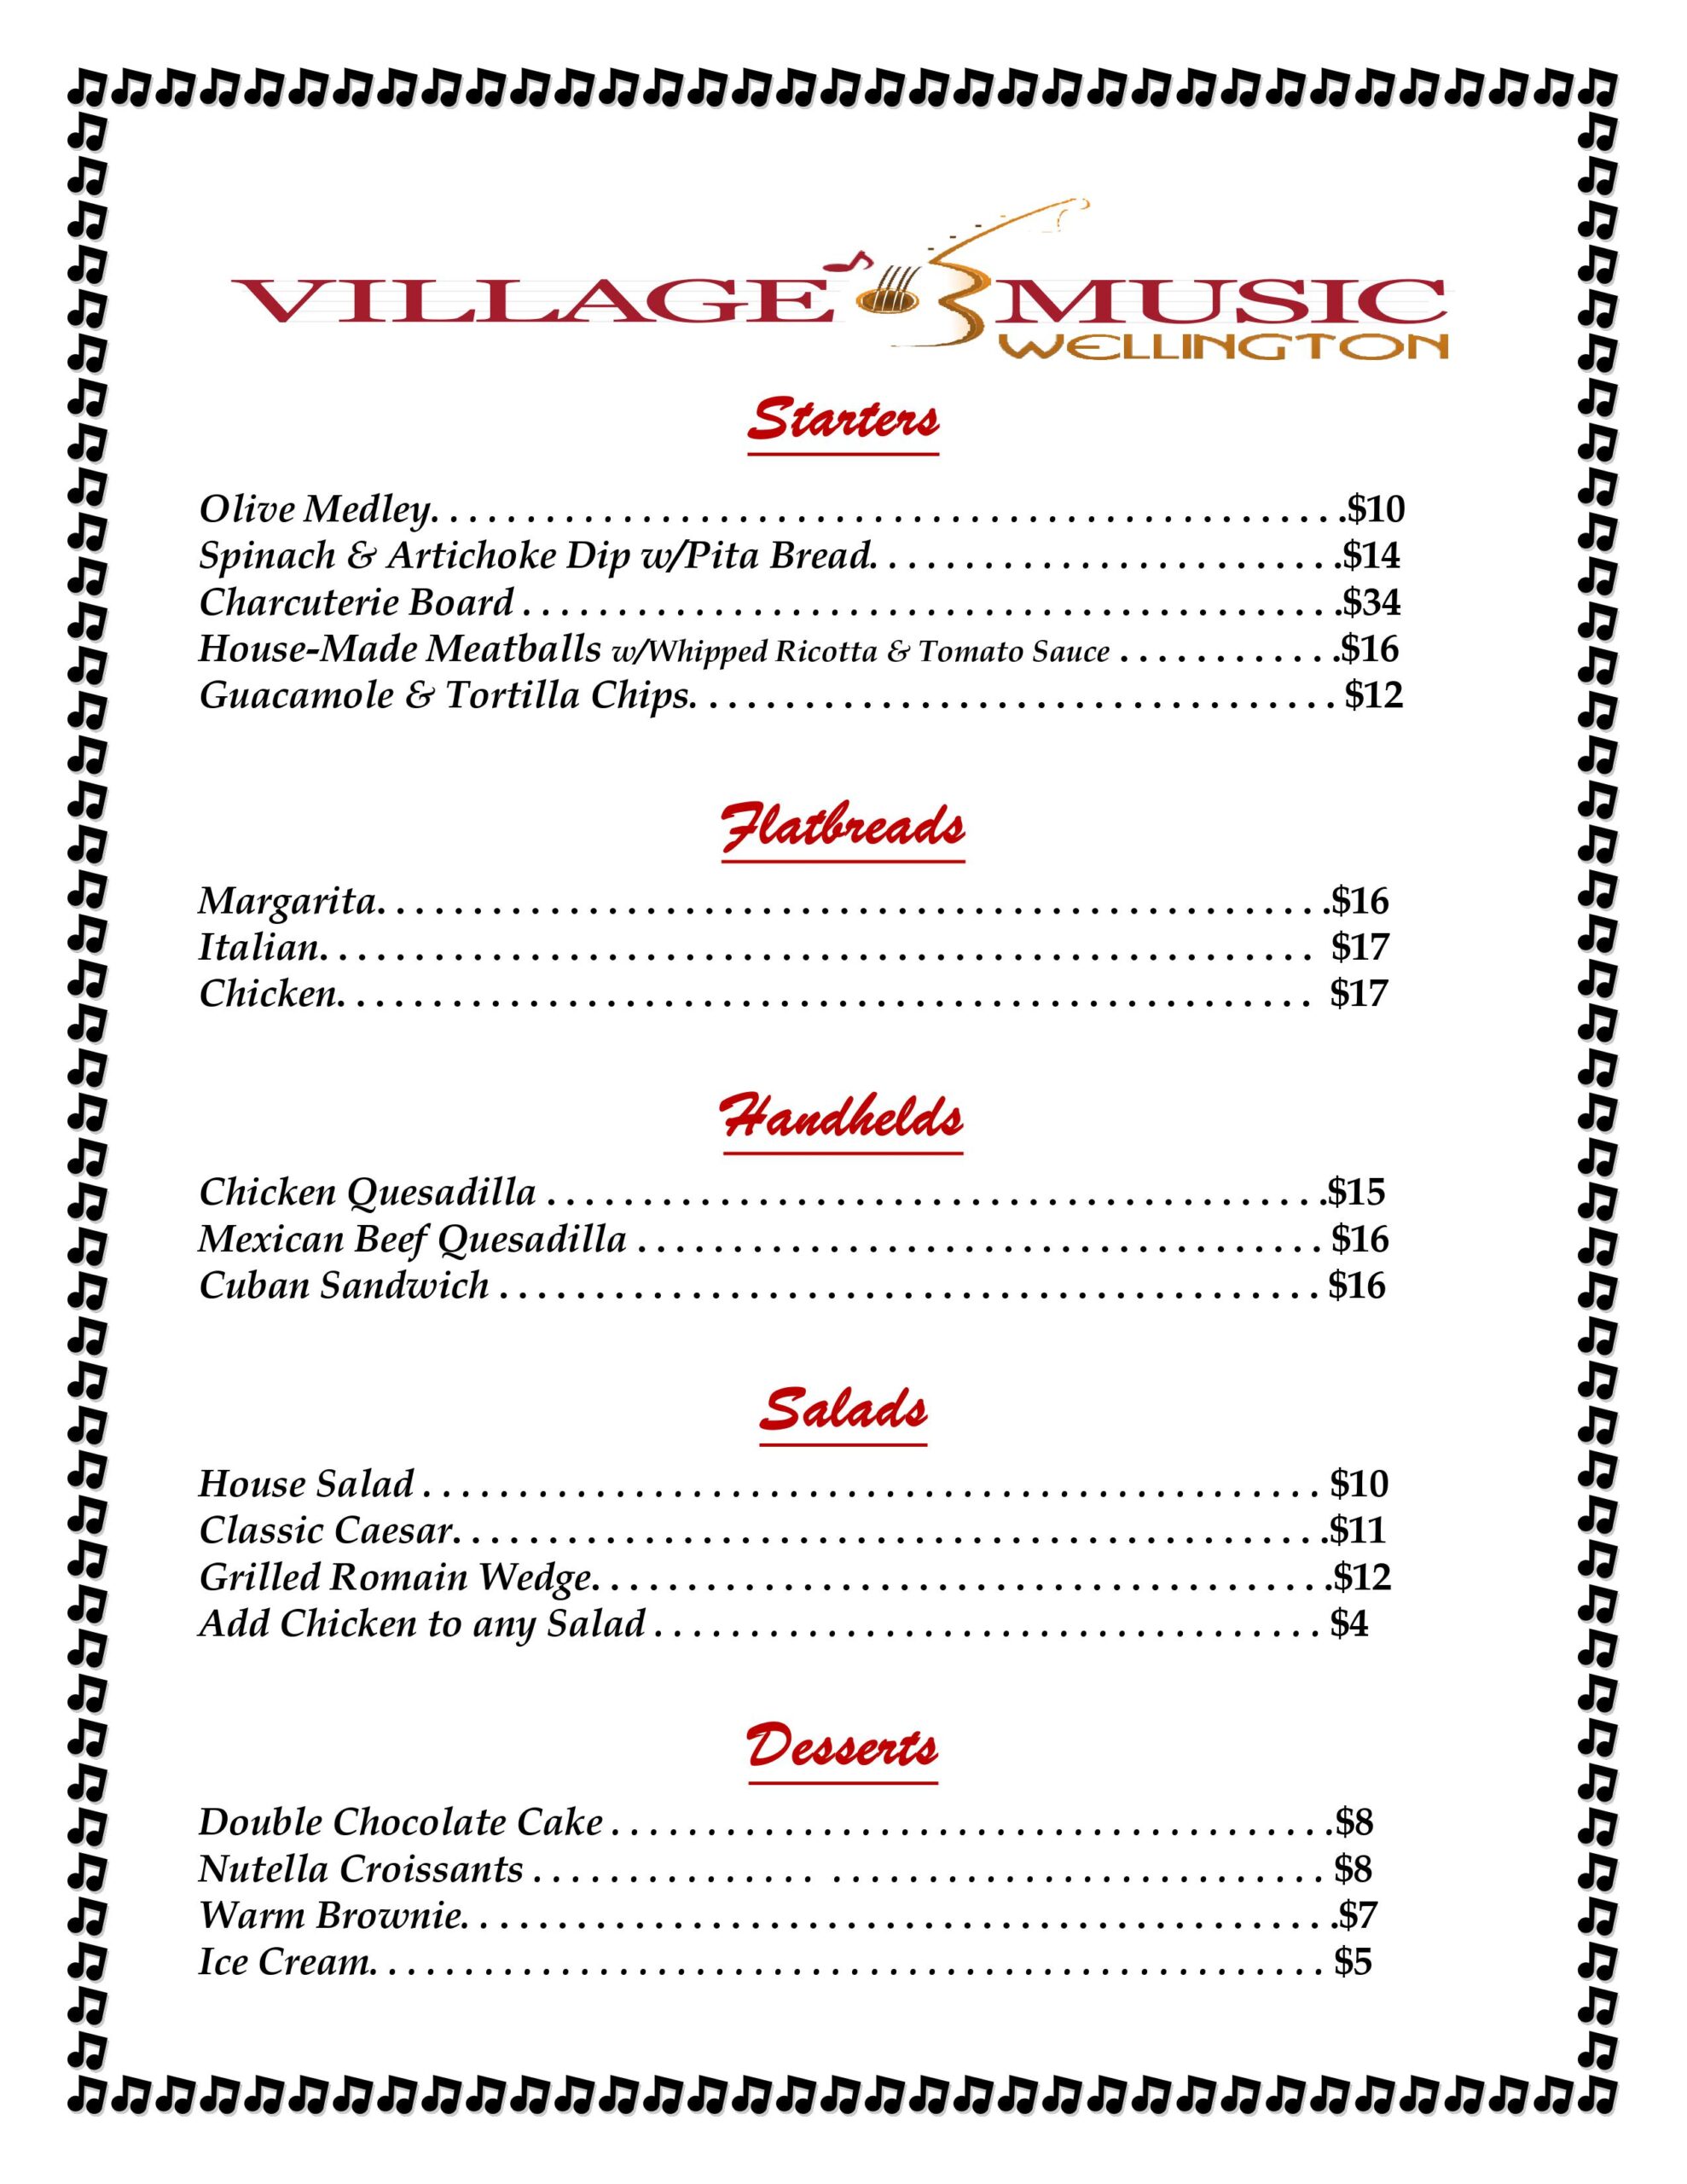 Village Music Cafe Dinner Menu